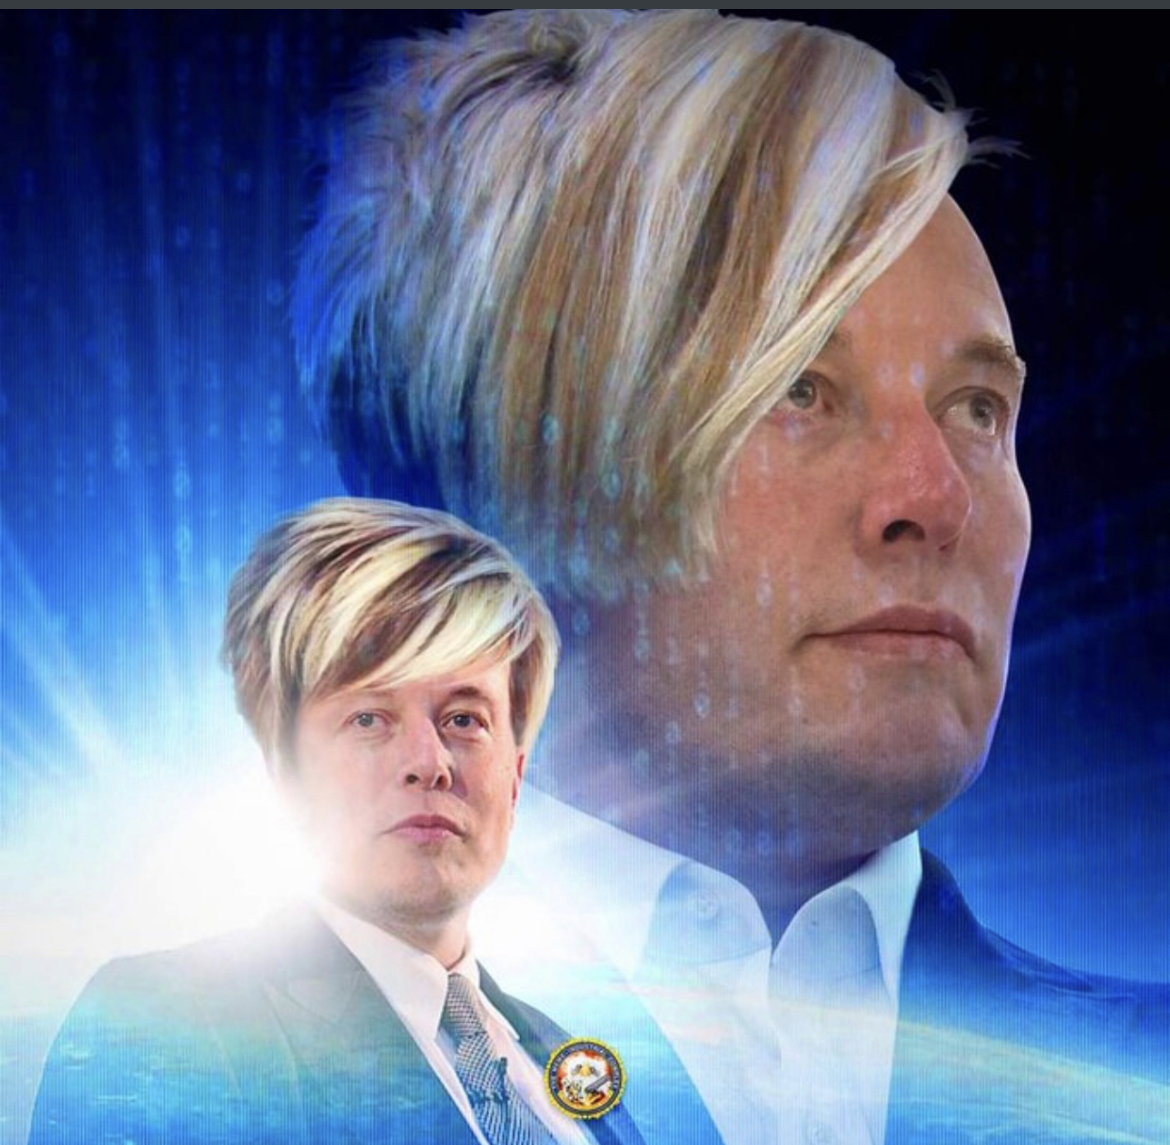 Space Karen - a photoshopped image of Elon Musk